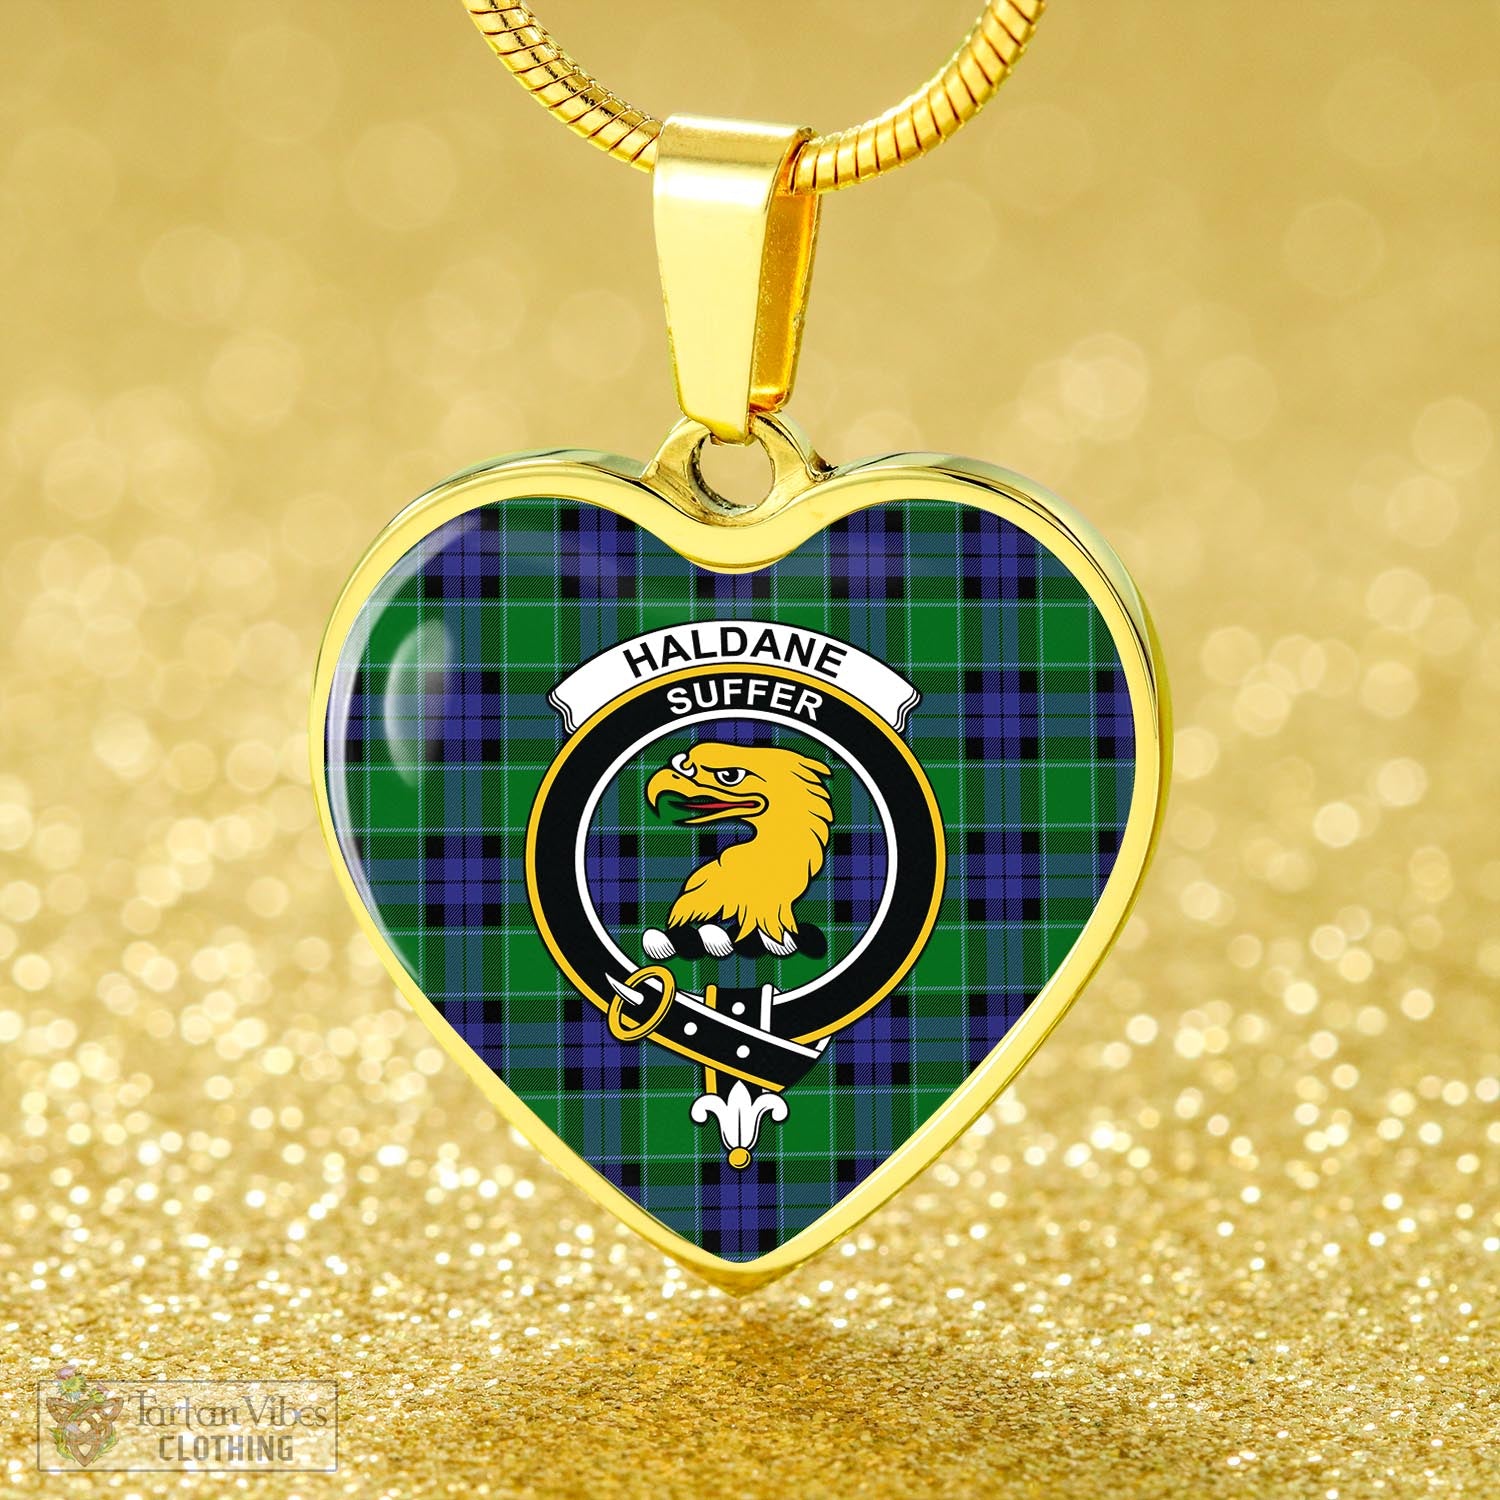 Tartan Vibes Clothing Haldane Tartan Heart Necklace with Family Crest